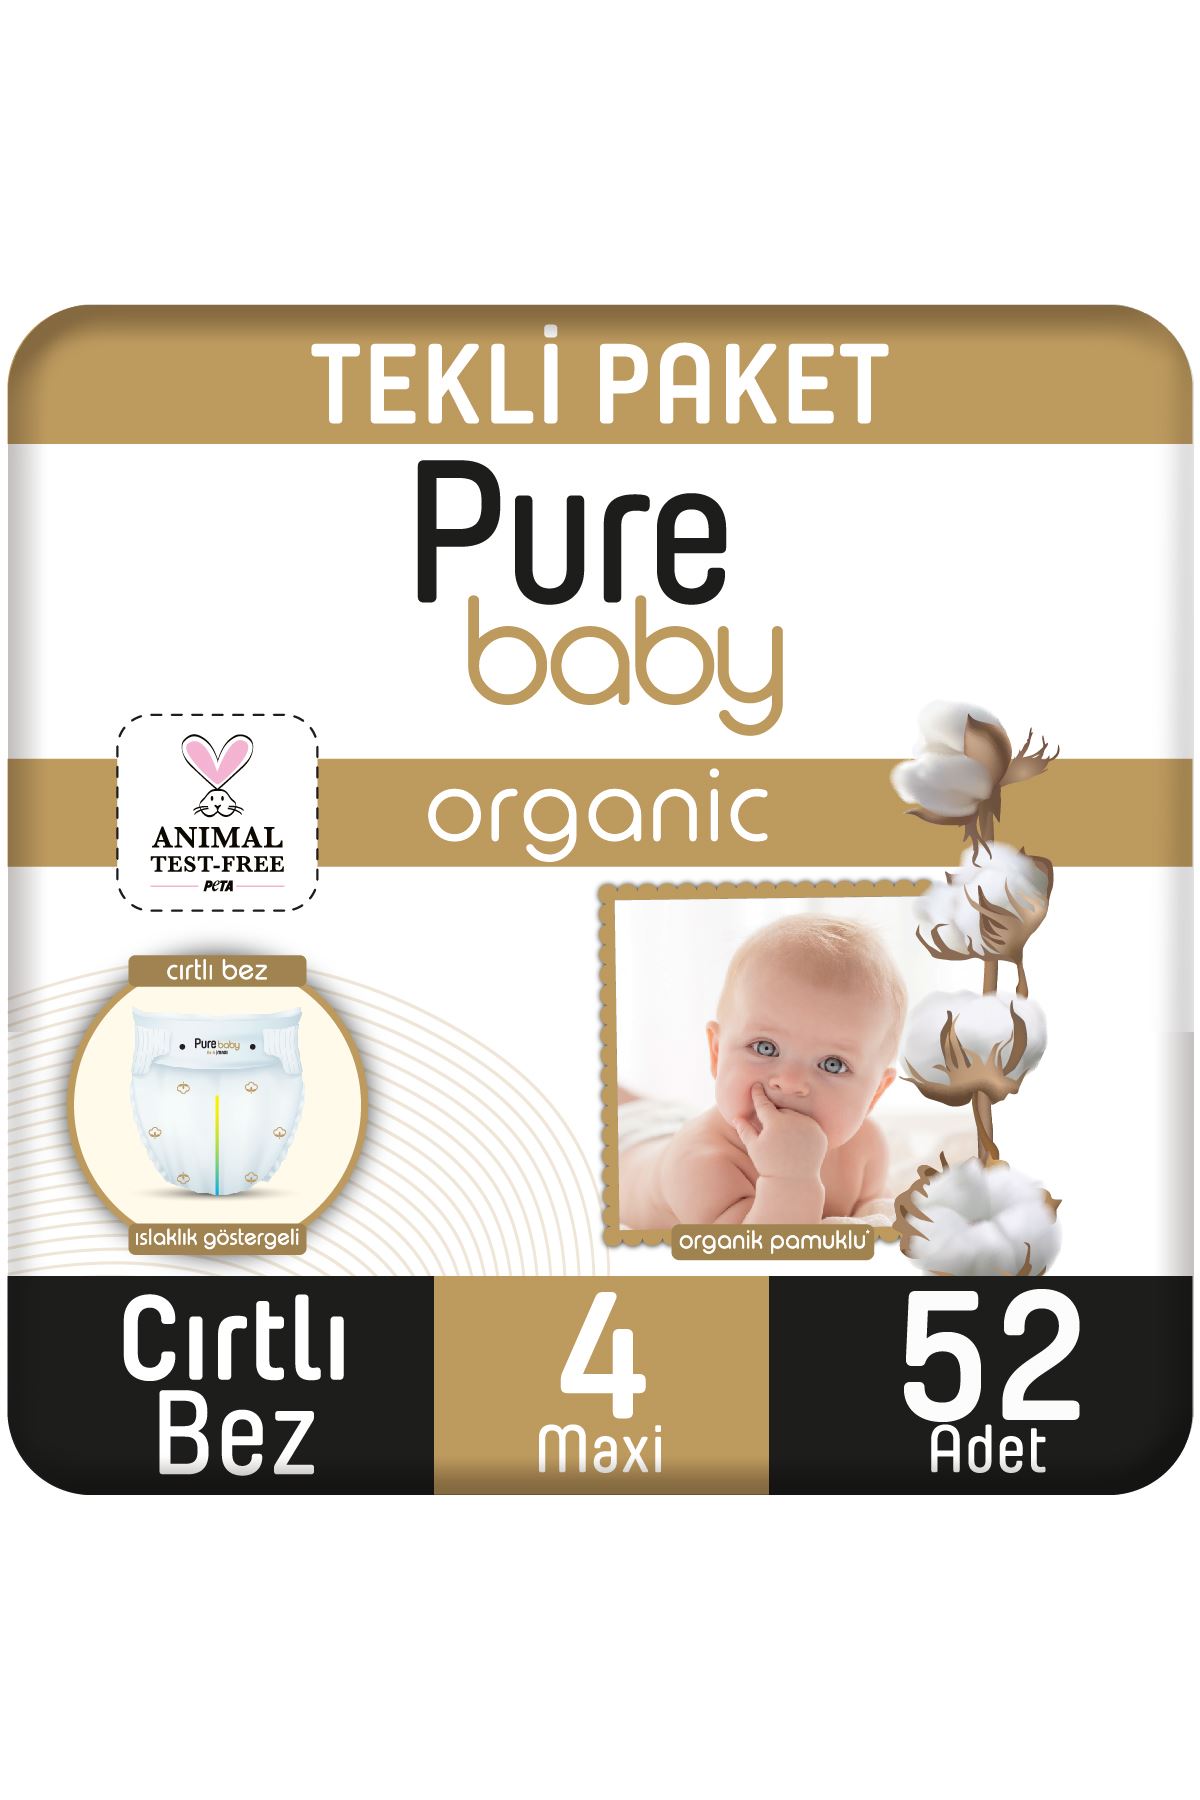 Pure Baby Organik Pamuklu Cırtlı Bez Tekli Paket 4 Numara Maxi 52 Adet